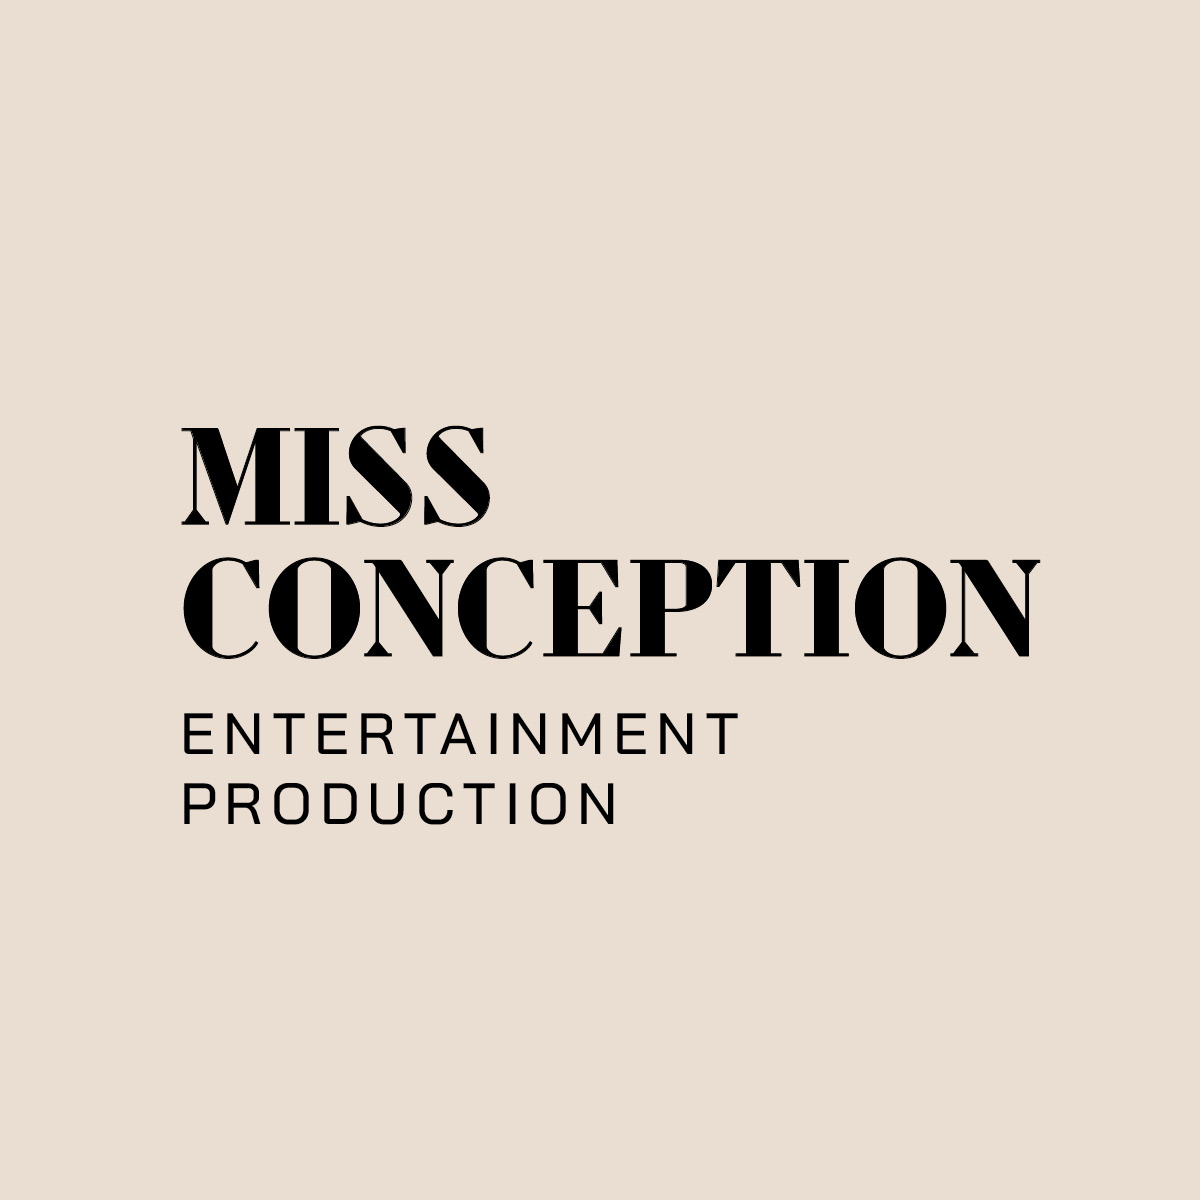 Miss-conception-toronto-entertainment-production-company-logo-design2